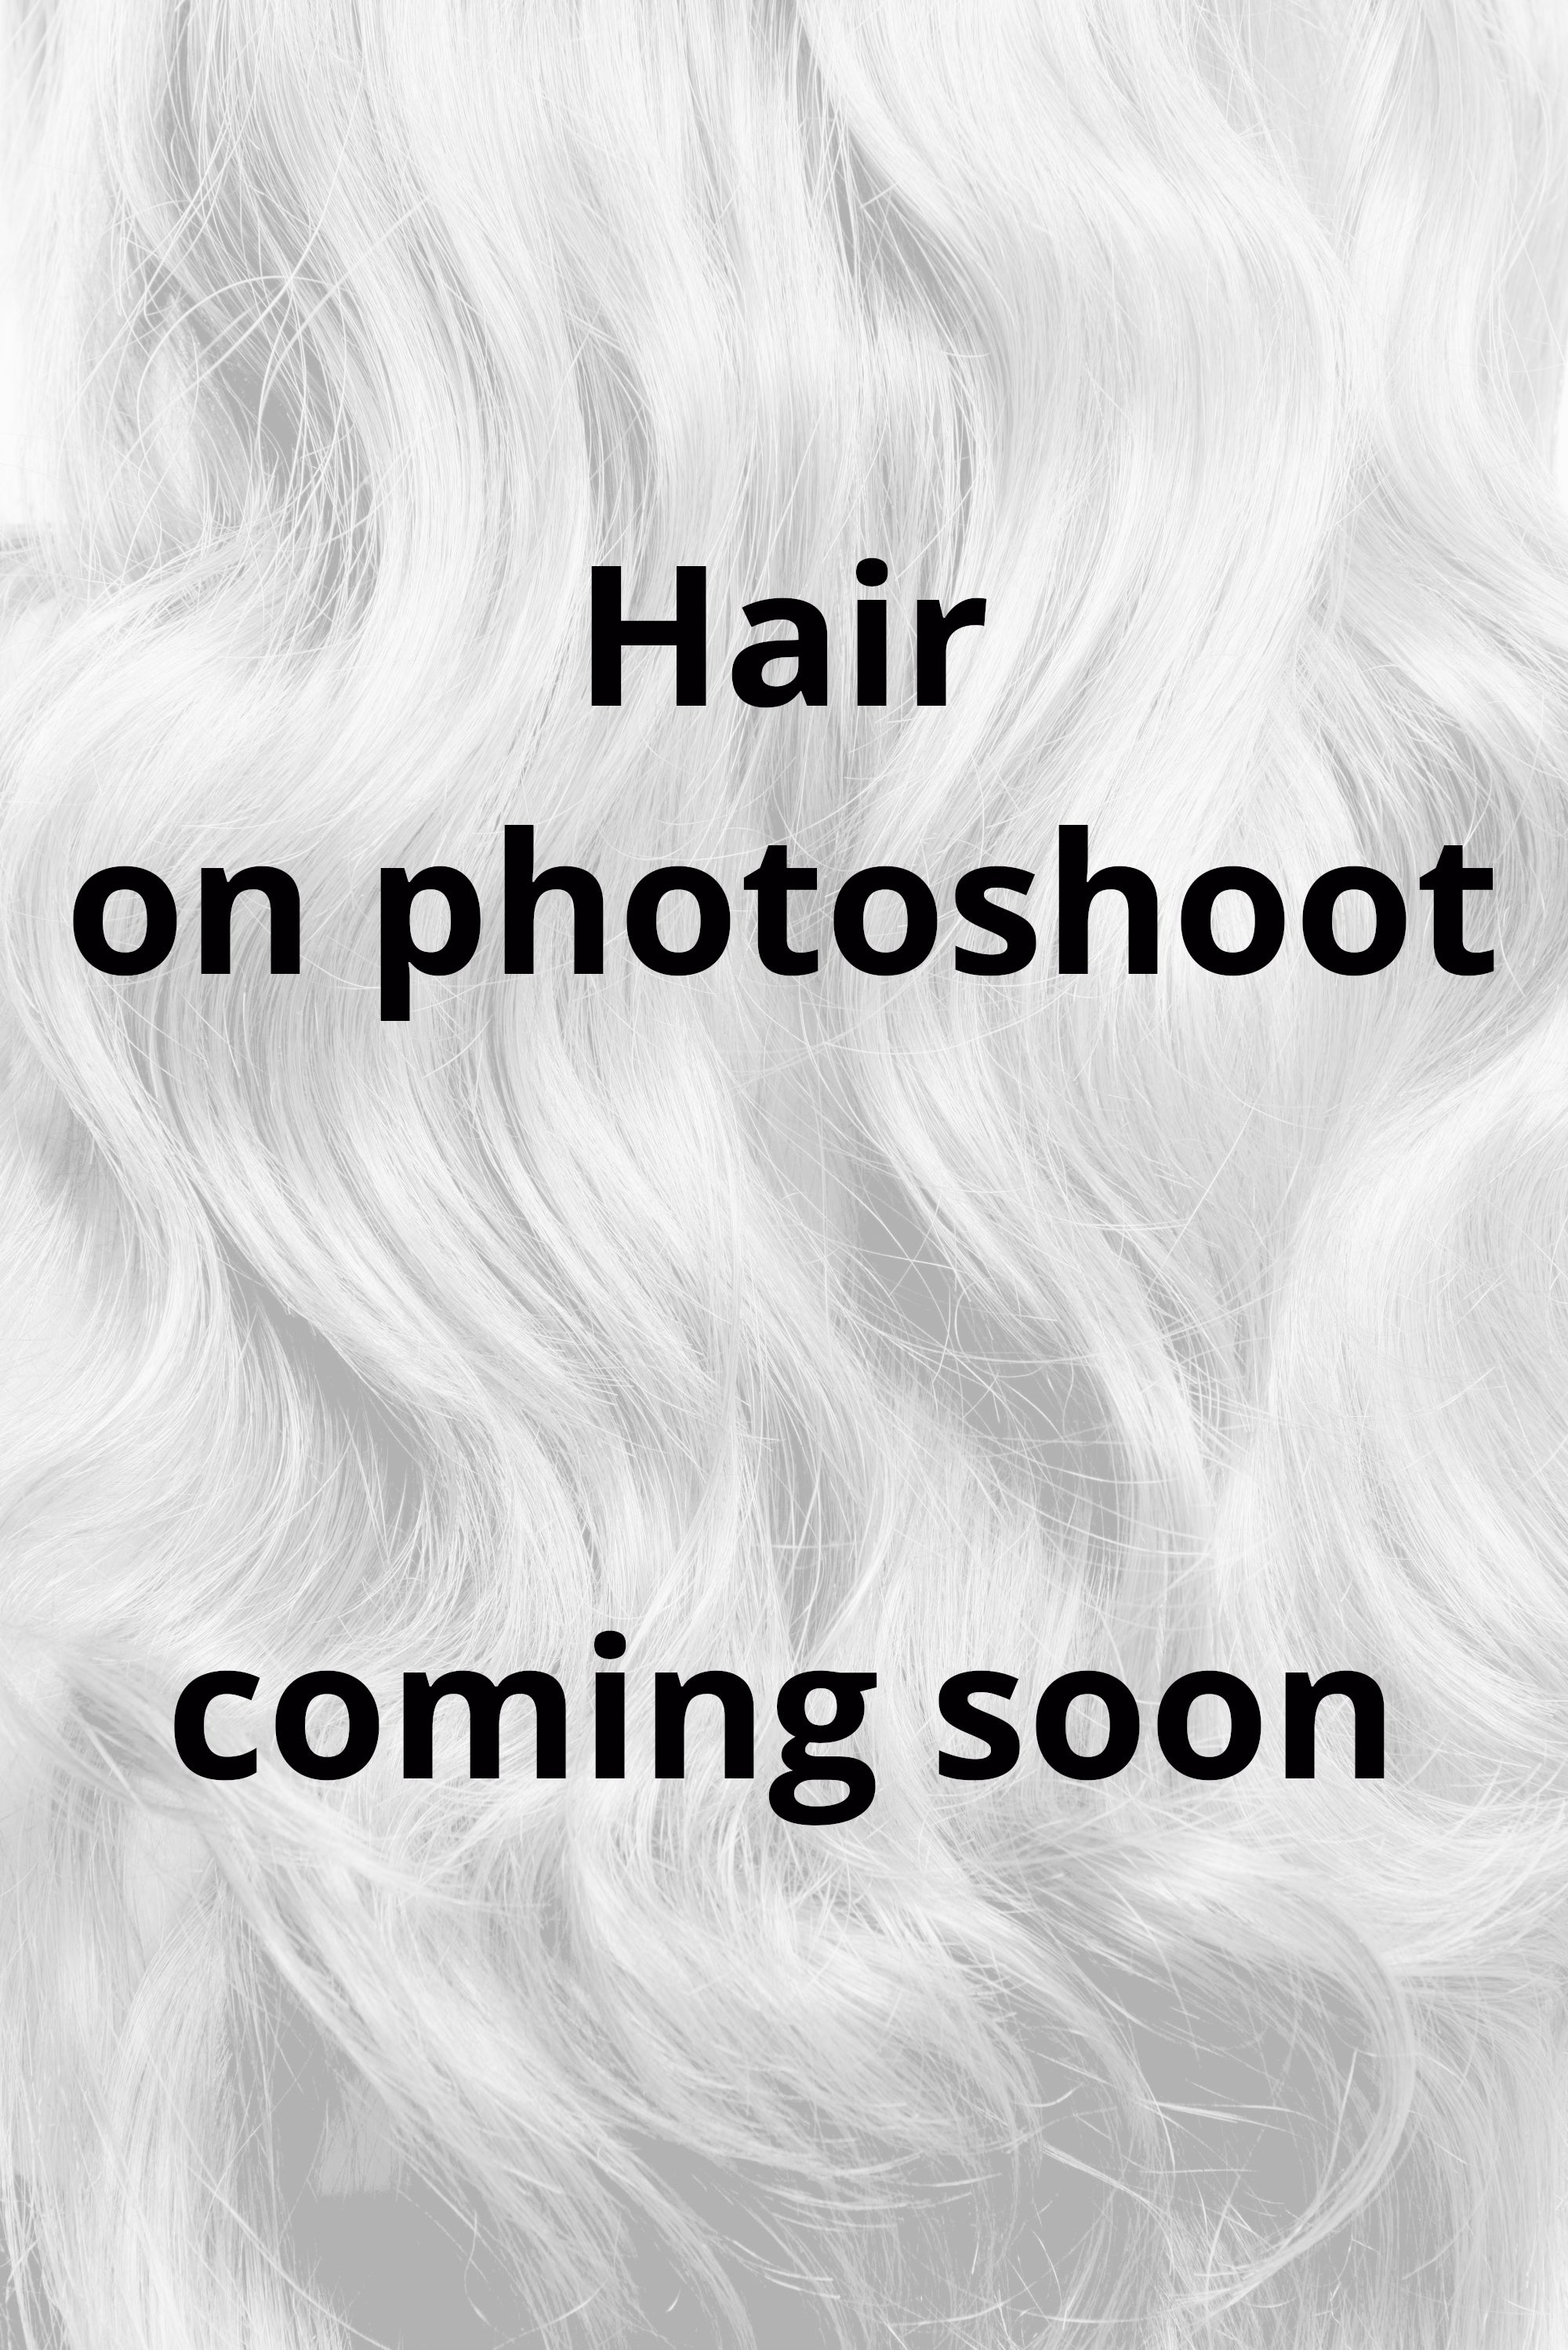 Behair professional Bulk hair "Premium" 22" (55cm) Natural Straight Highlights Light Ash Brown/Ice Blond #10/000 - 25g hair extensions